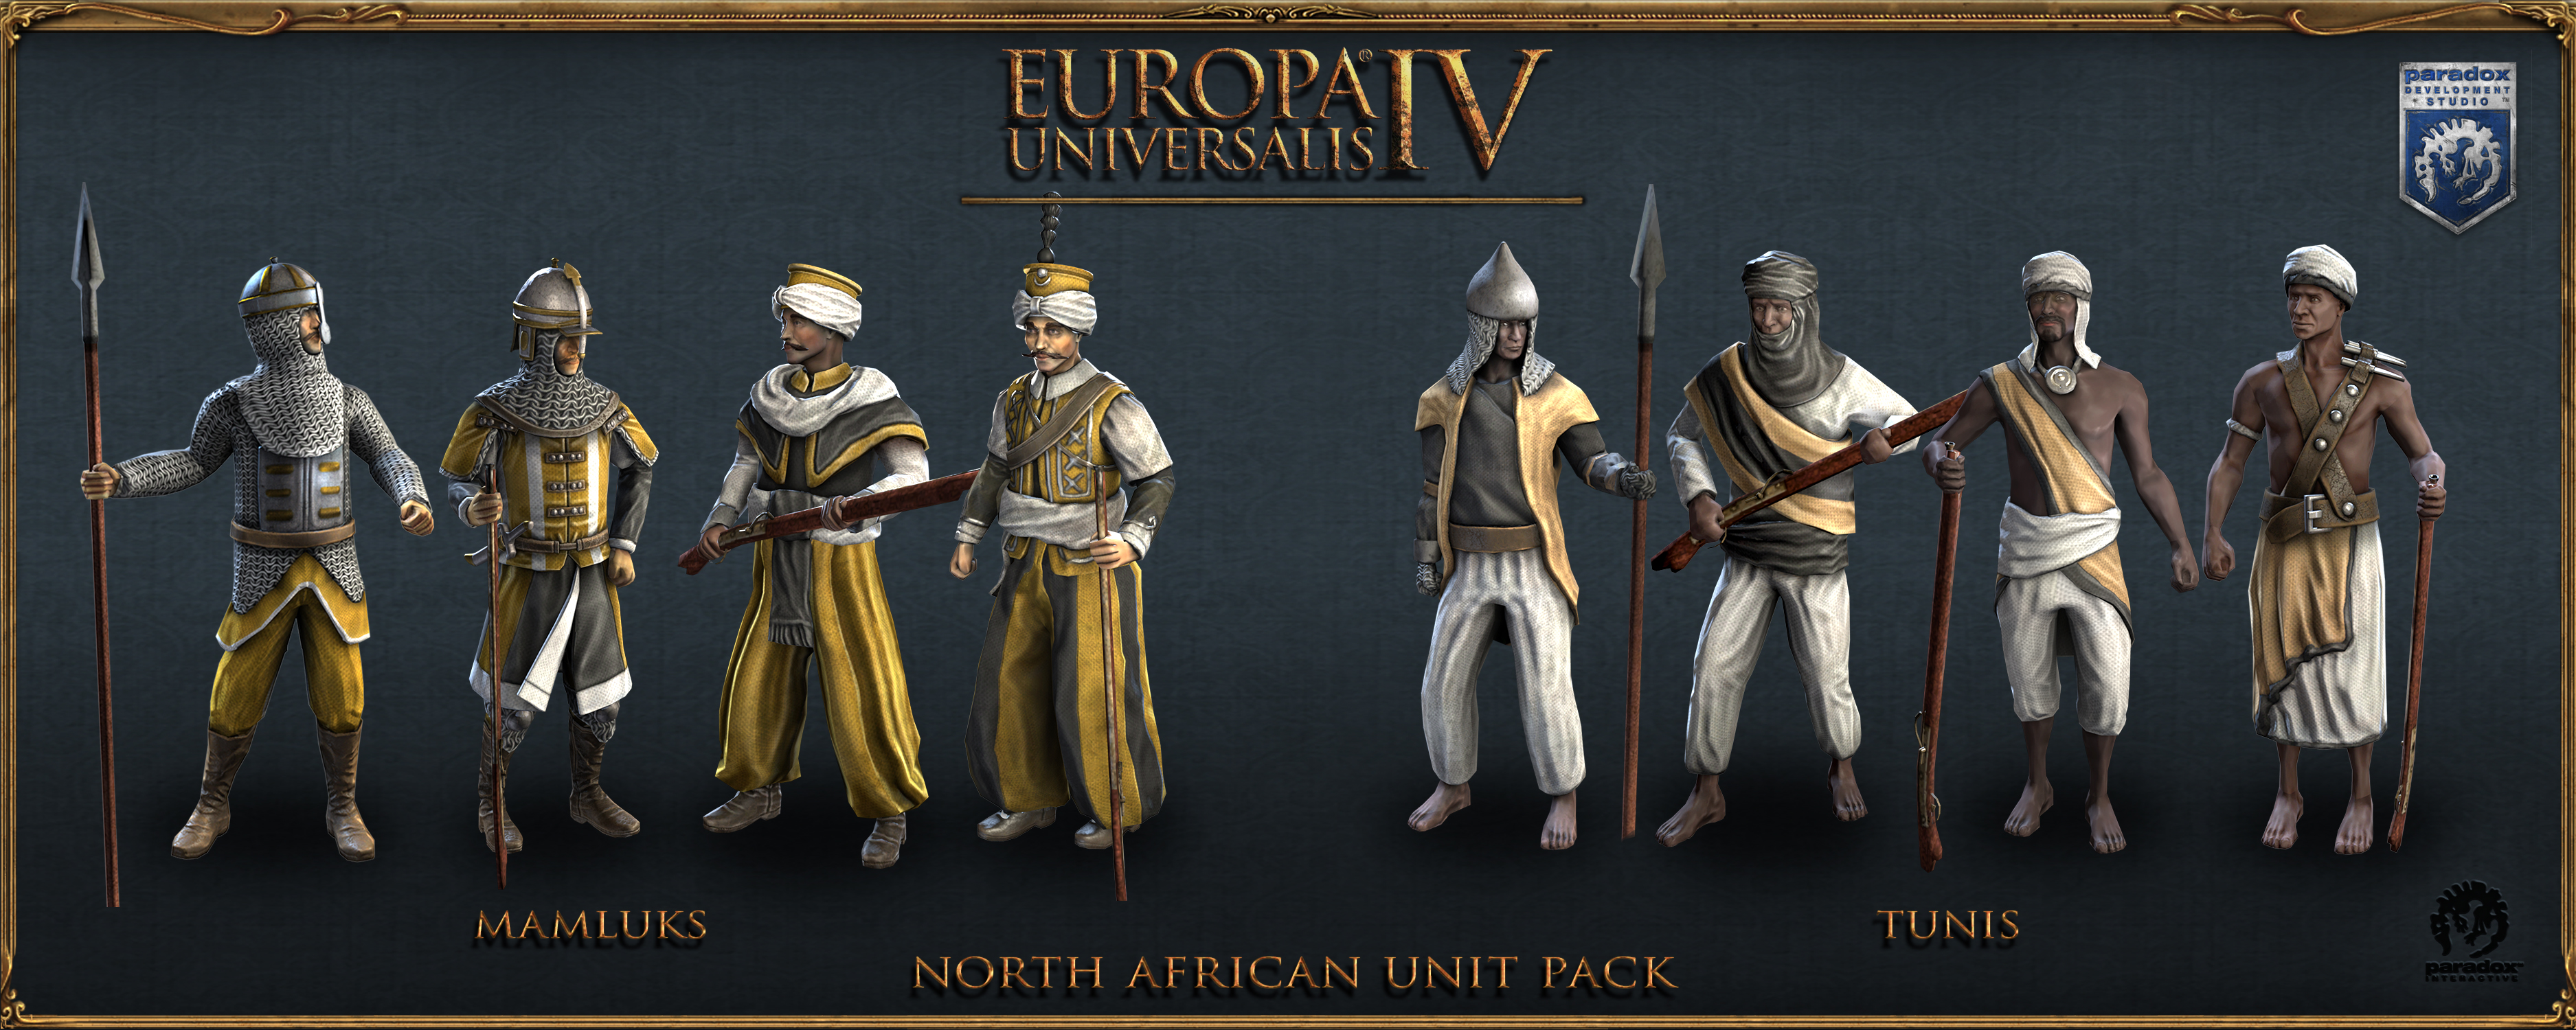 Content Pack - Europa Universalis IV: Mare Nostrum screenshot